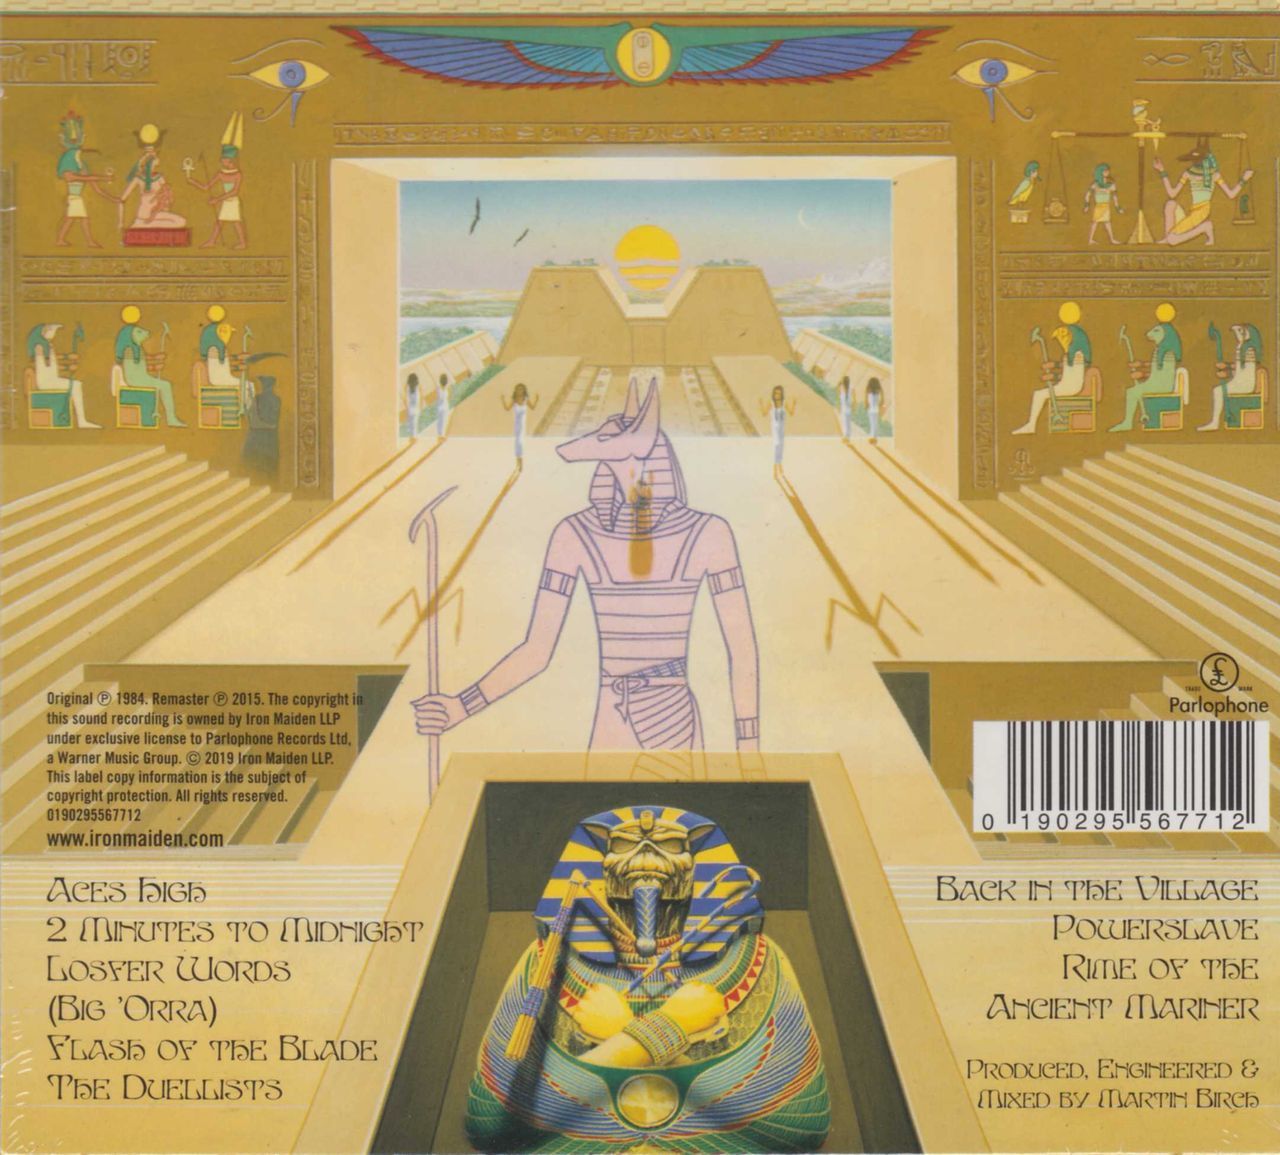 Iron Maiden Powerslave - Remastered UK CD album — RareVinyl.com